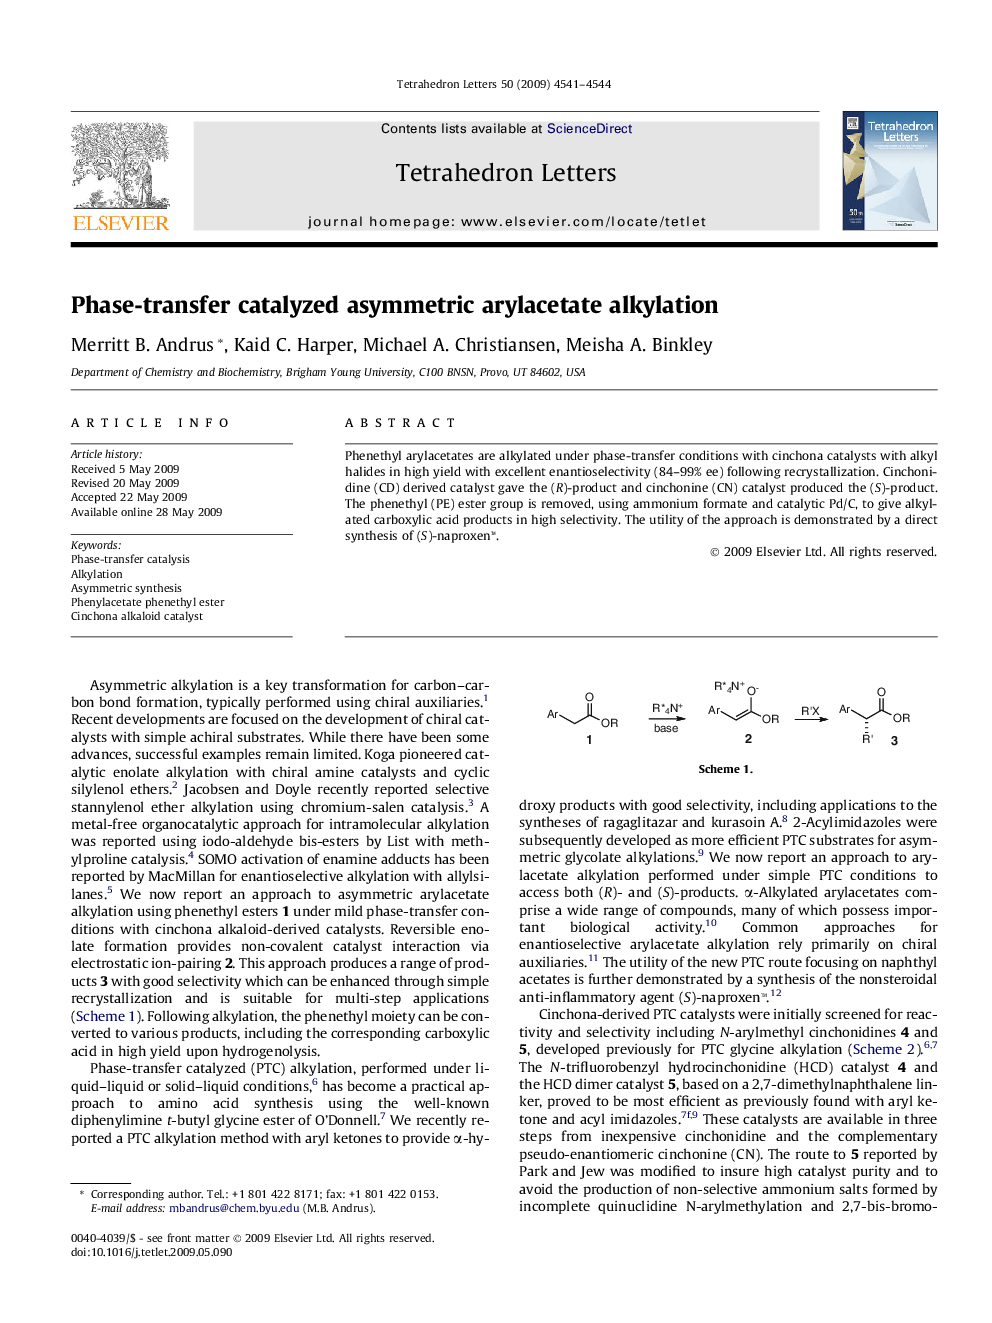 Phase-transfer catalyzed asymmetric arylacetate alkylation